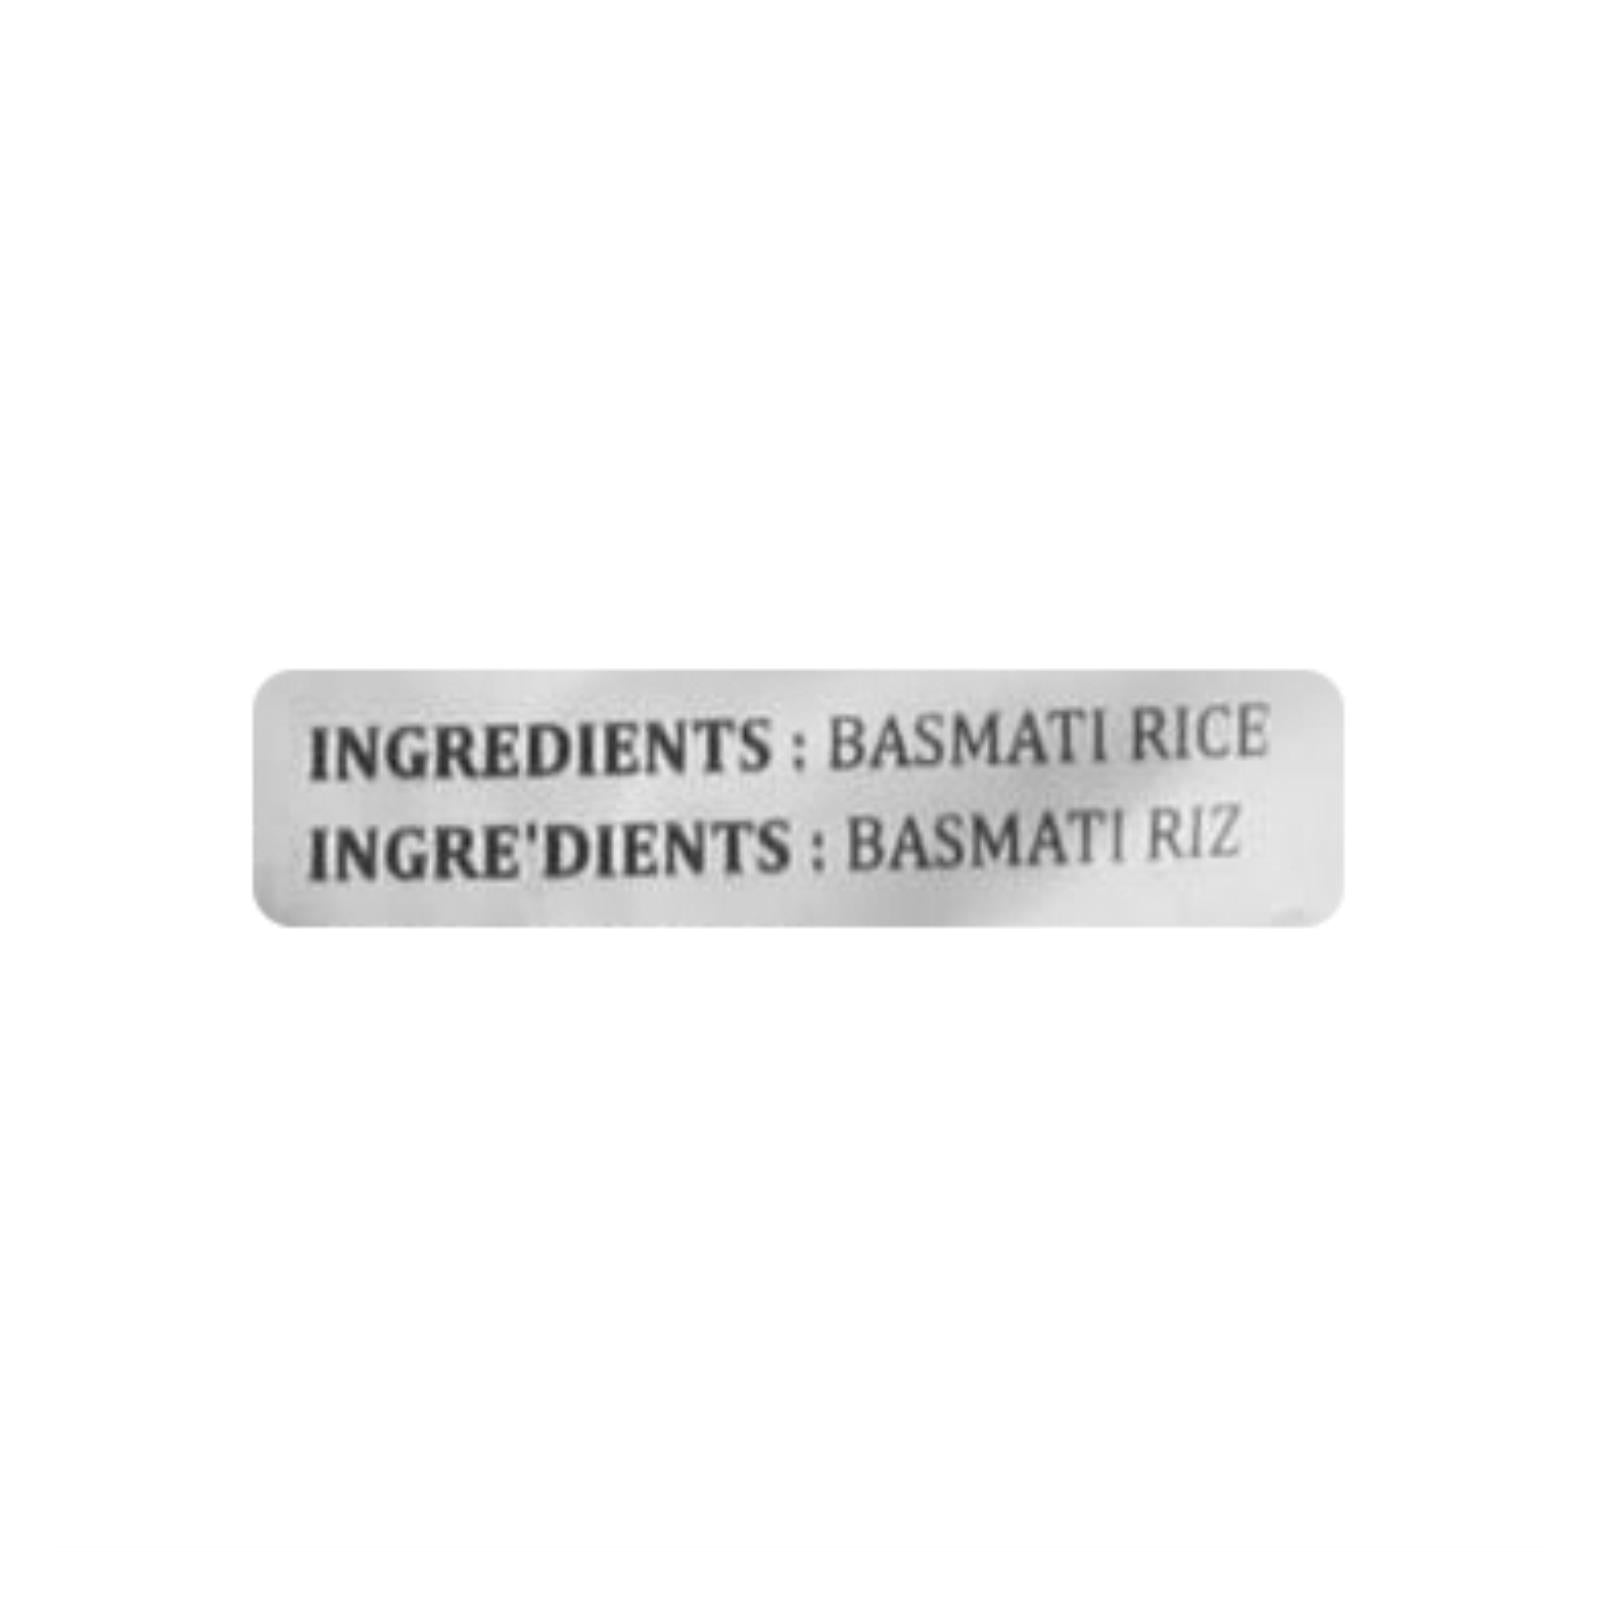 Khazana, Khazana - Rice Premium Basmati - Case of 6 - 2 LB (Pack of 6)